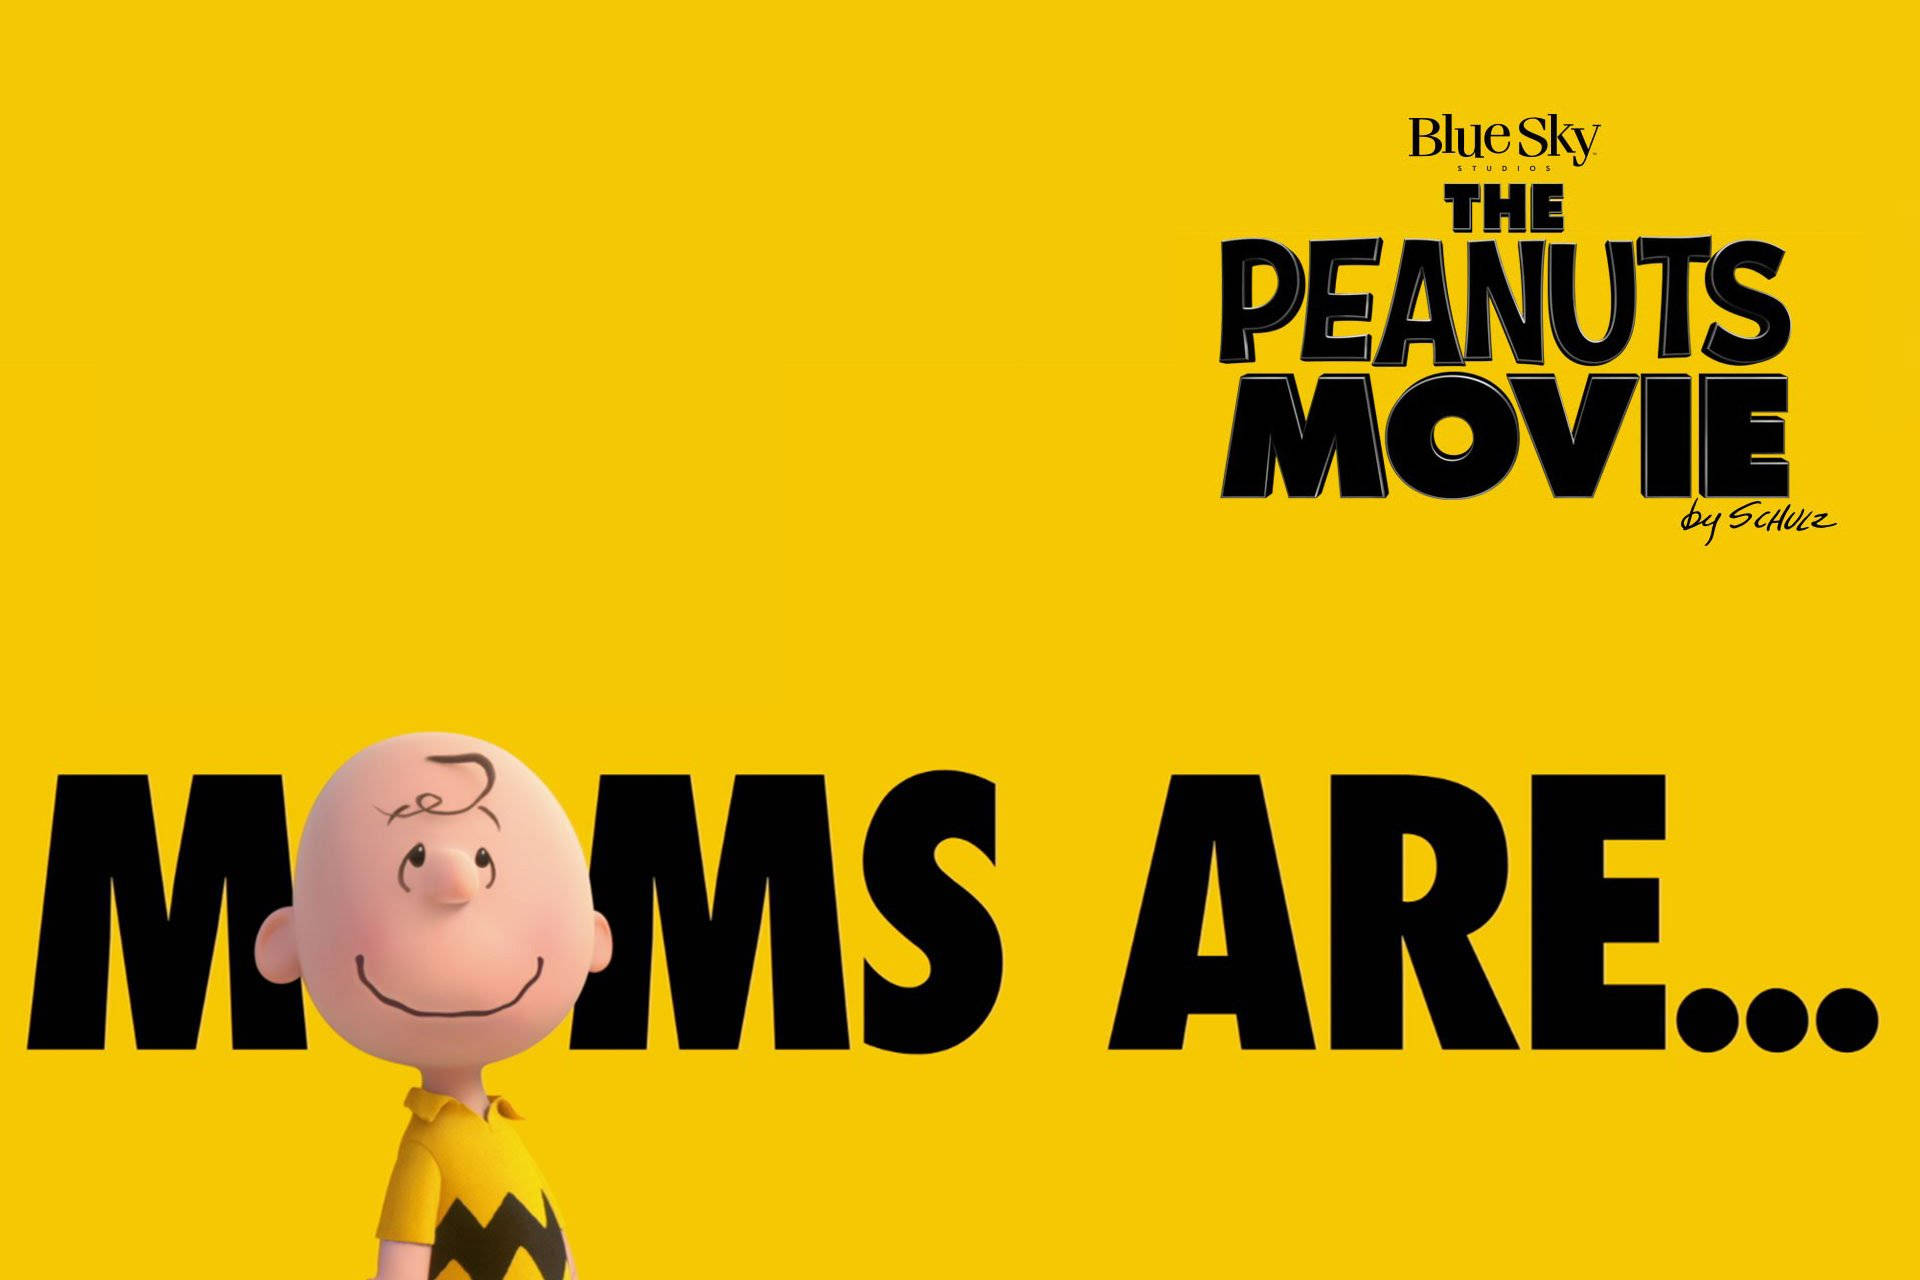 Charlie Brown Peanut Movie Poster